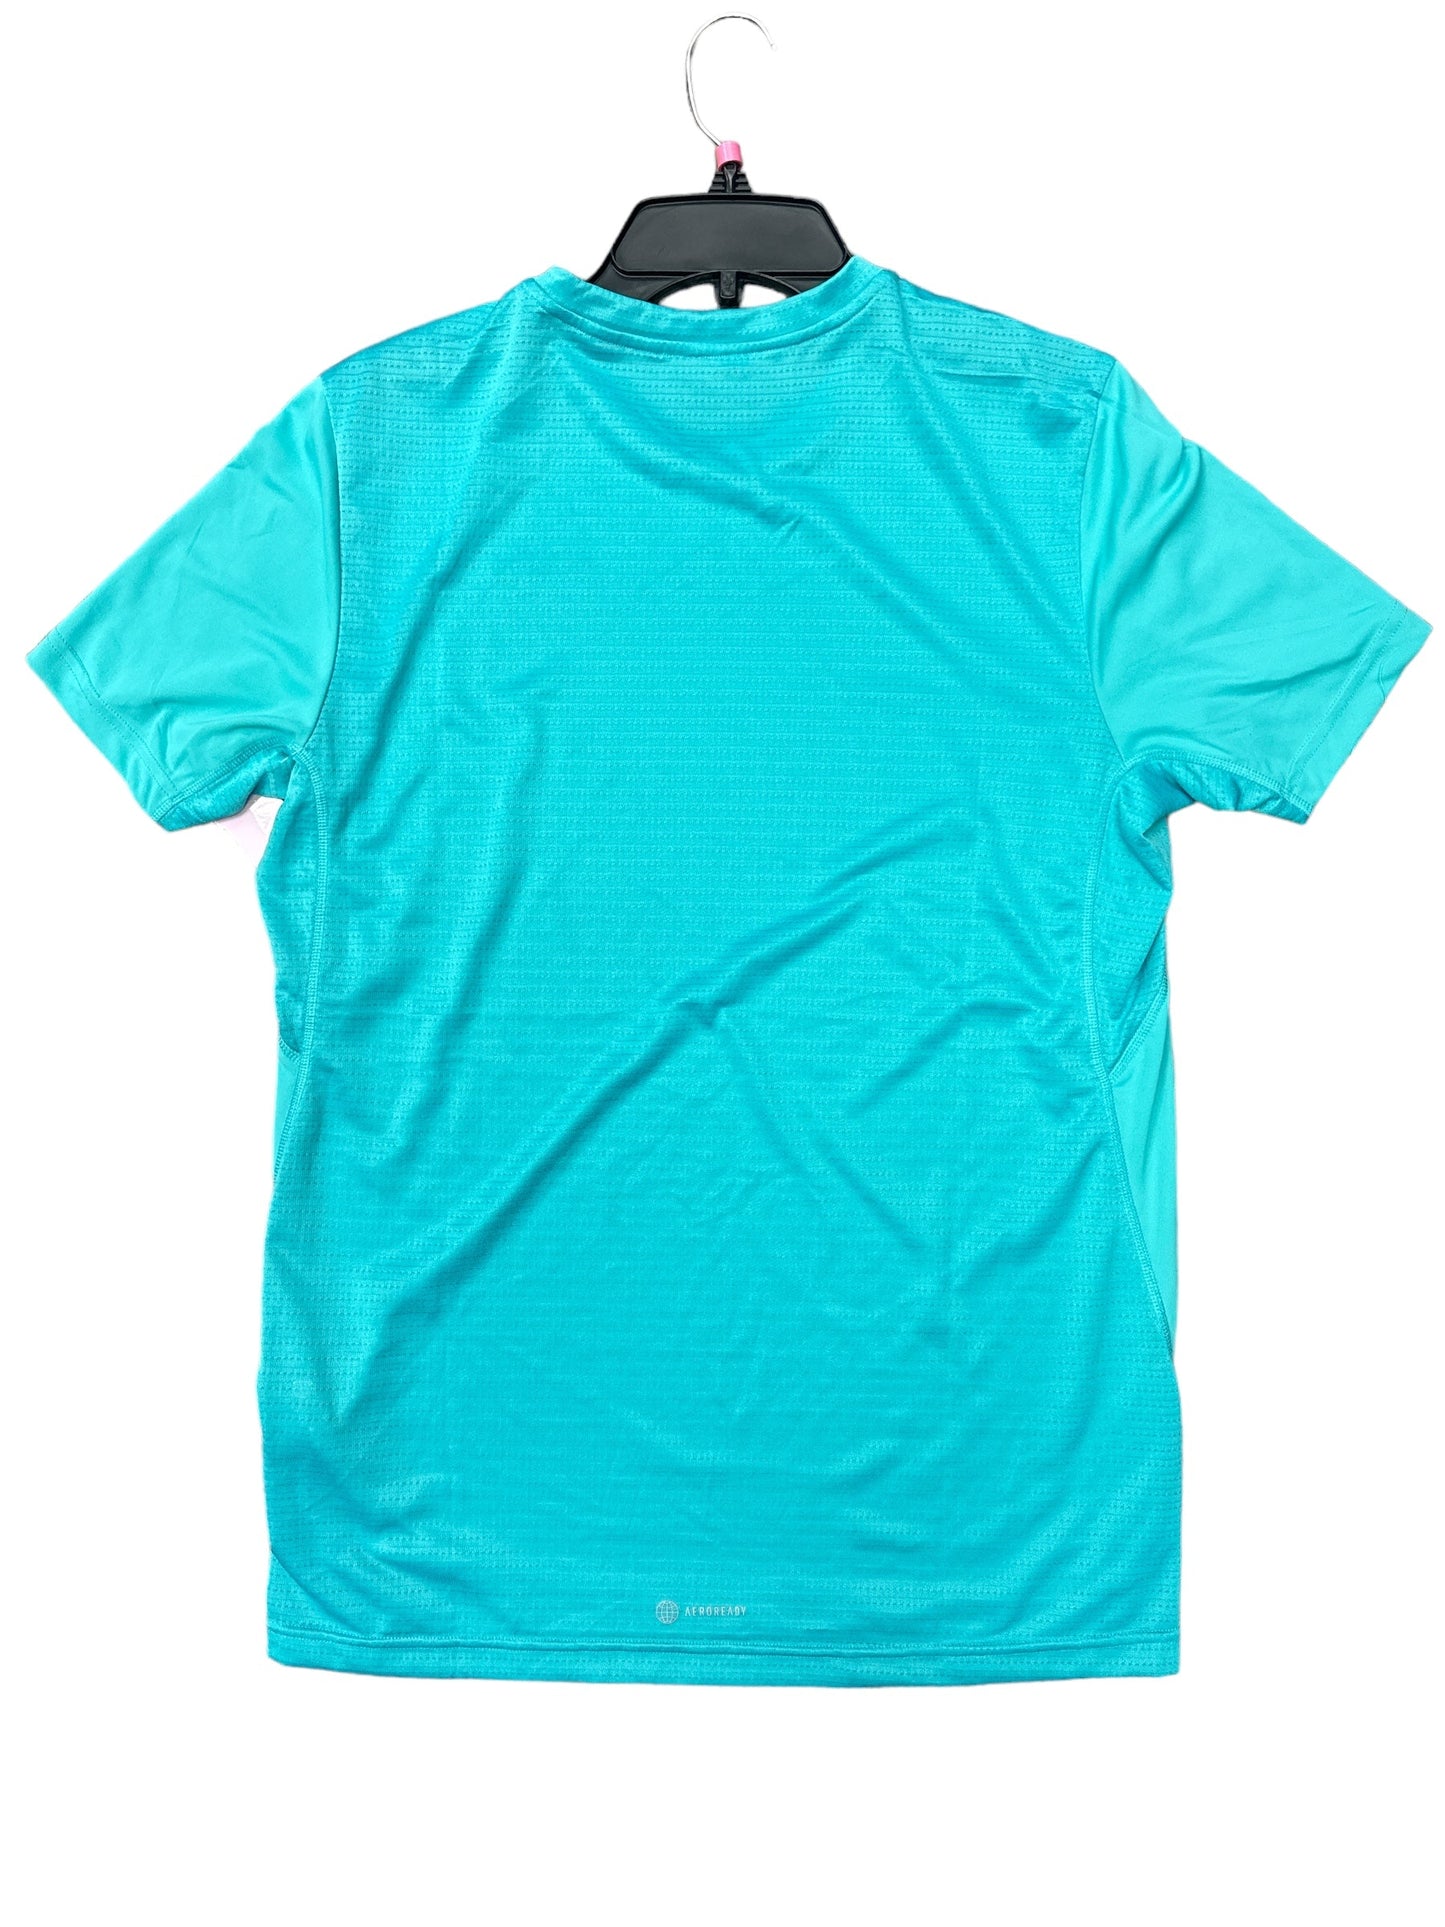 Aqua Athletic Top Short Sleeve Adidas, Size S